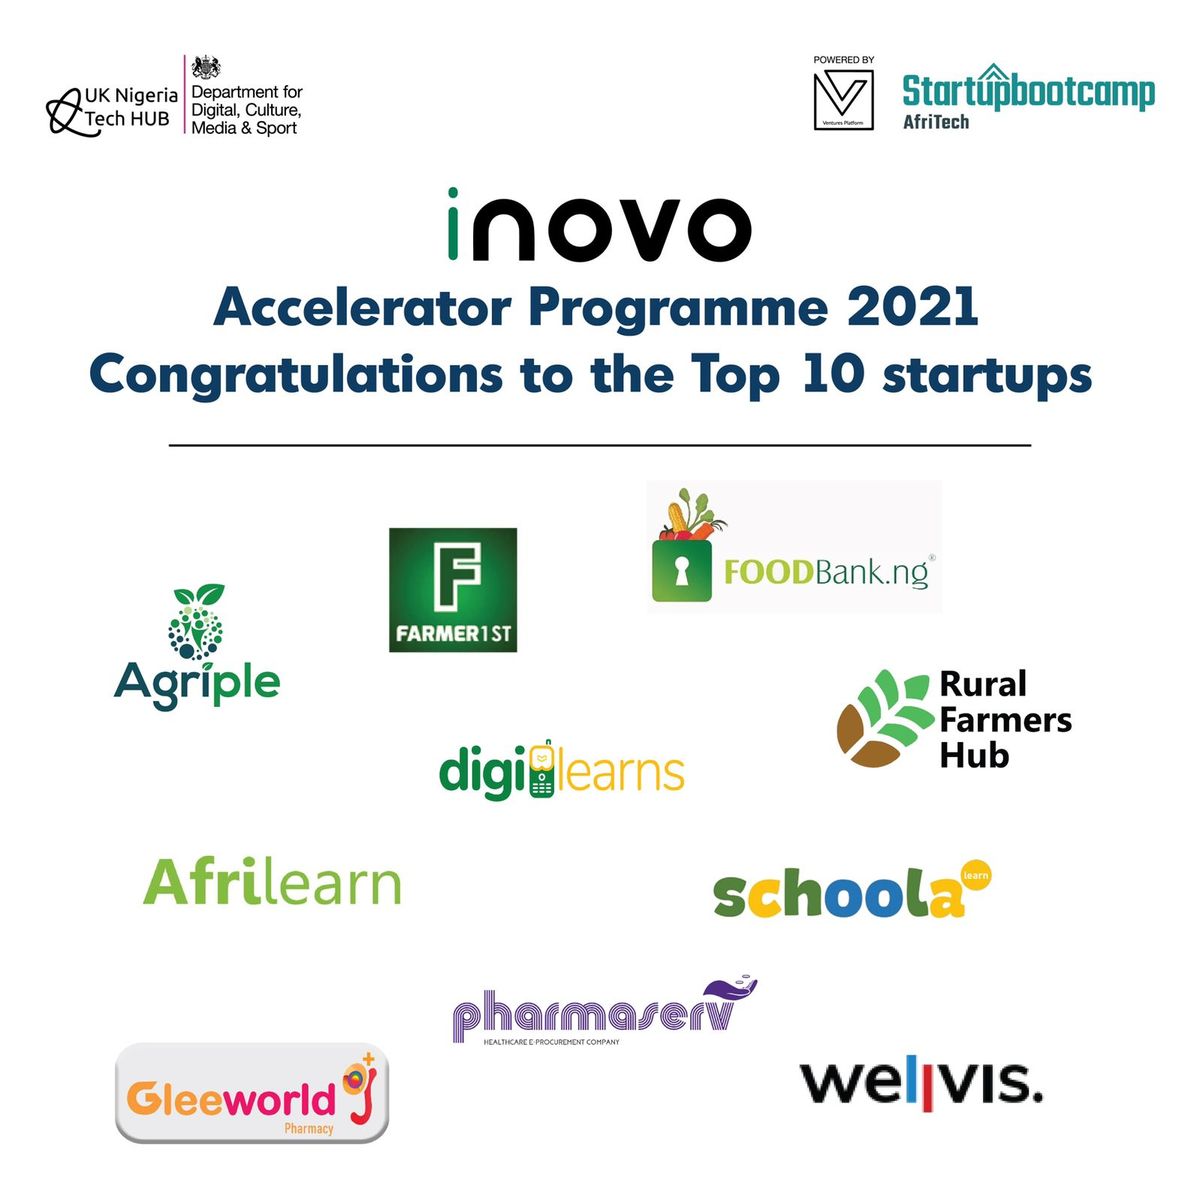 UK Nigeria TechHub announces the graduation of 10 startups from the iNOVO Accelerator Programme